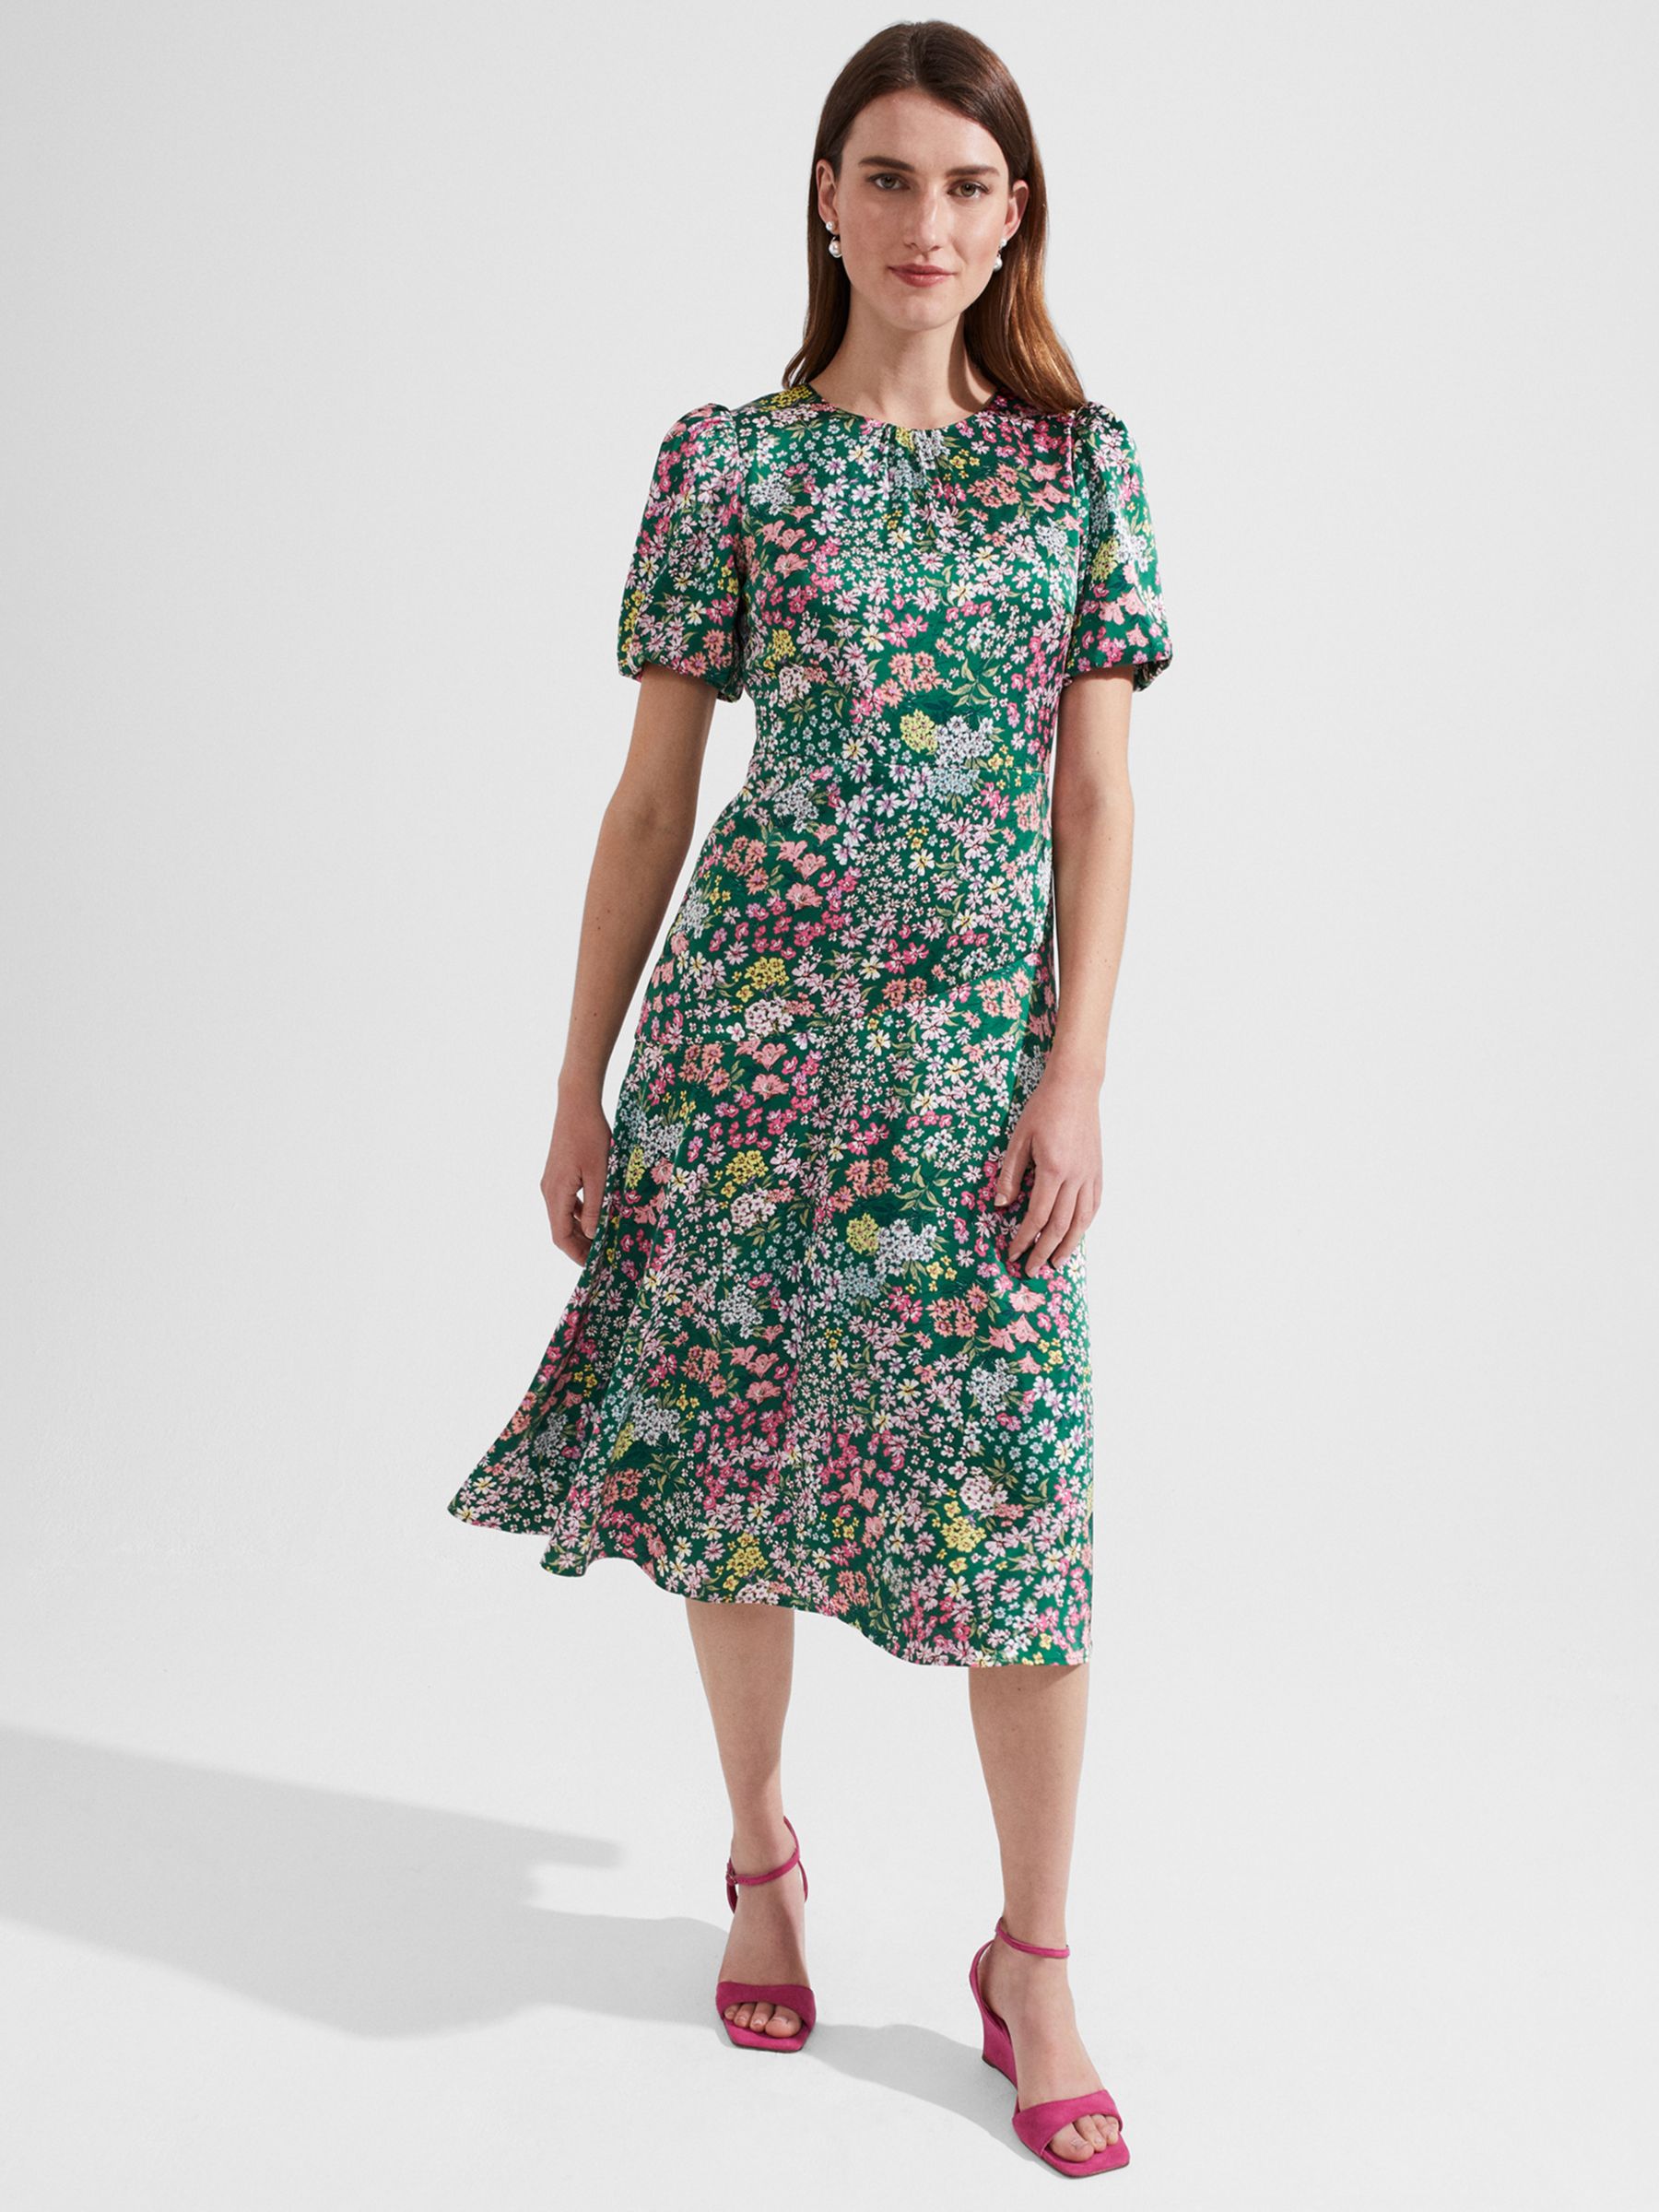 Hobbs Christina Midi Floral Dress, Green/Multi at John Lewis & Partners